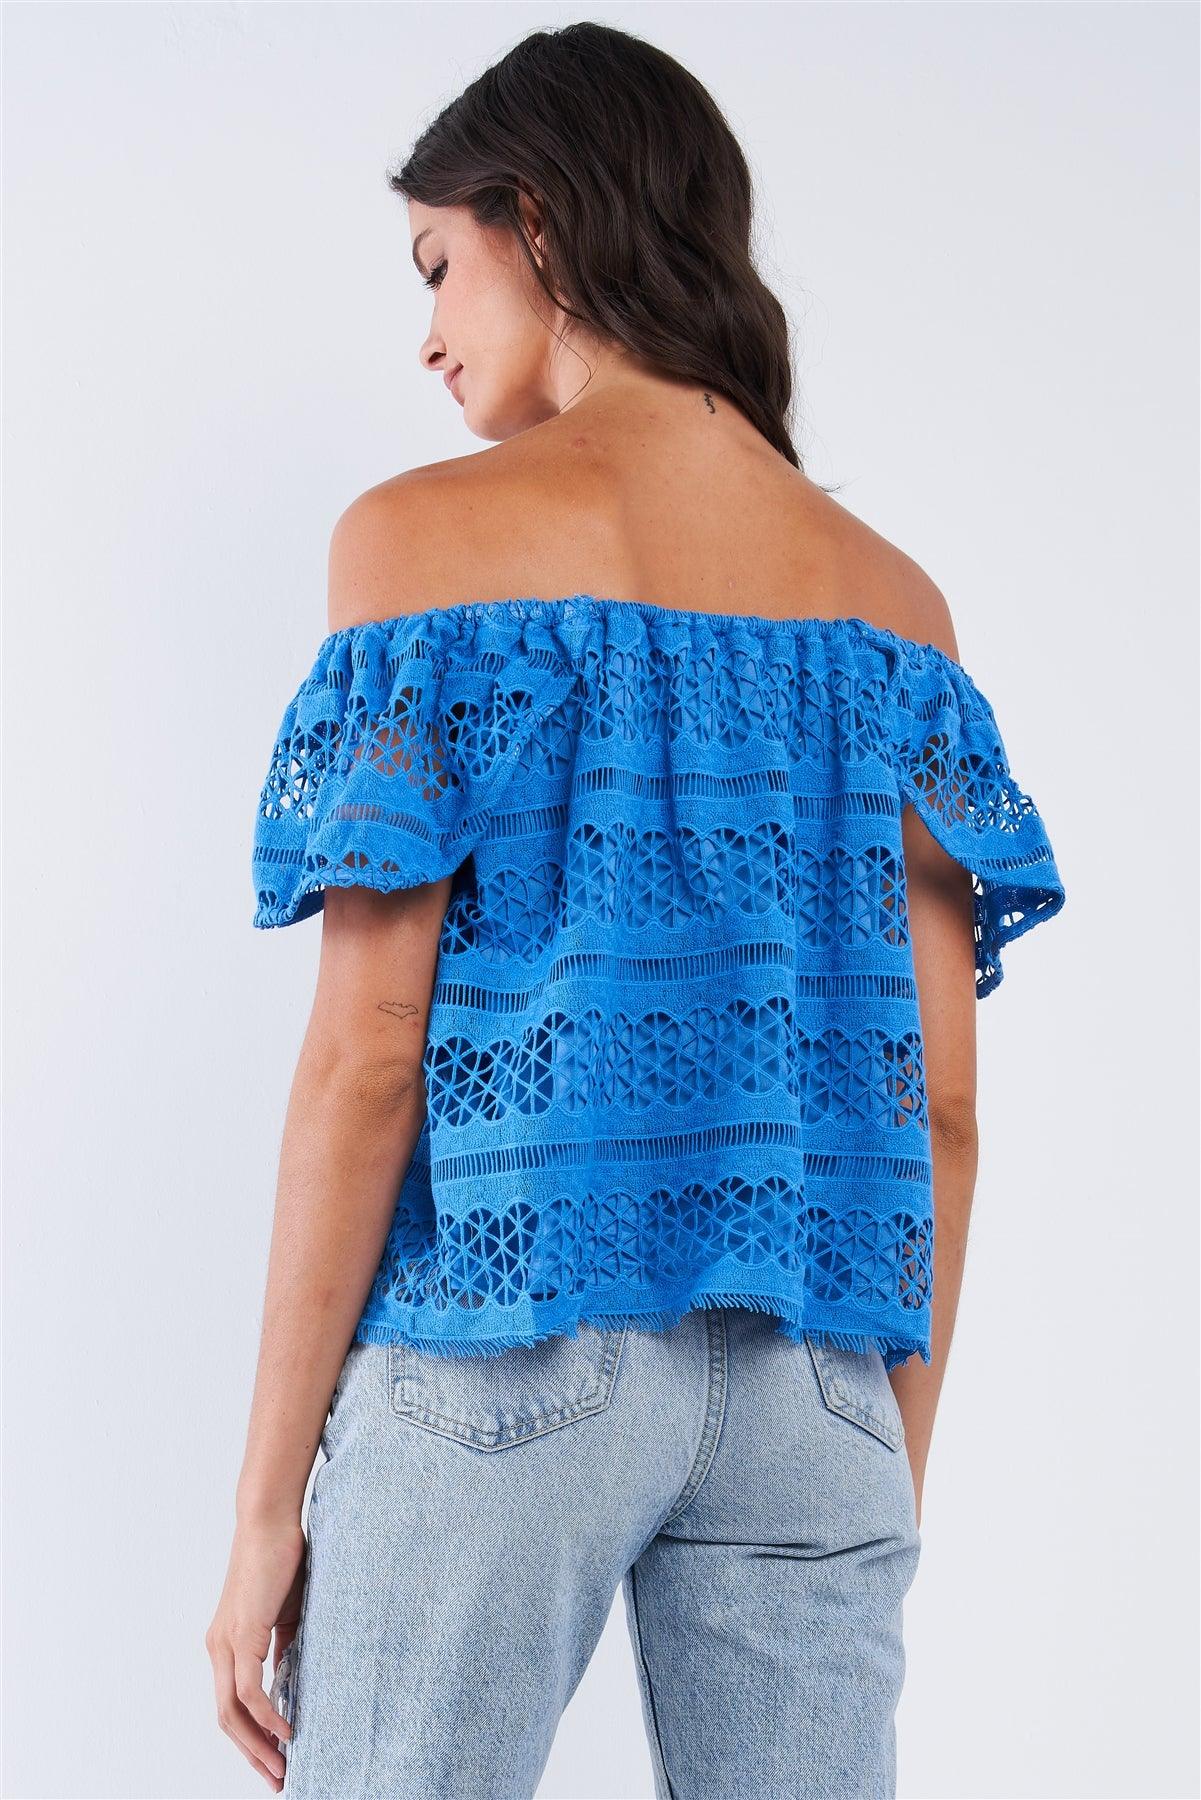 Blue Crochet Off-The-Shoulder Angel Wing Mini Sleeve Multi Pattern Lined Top